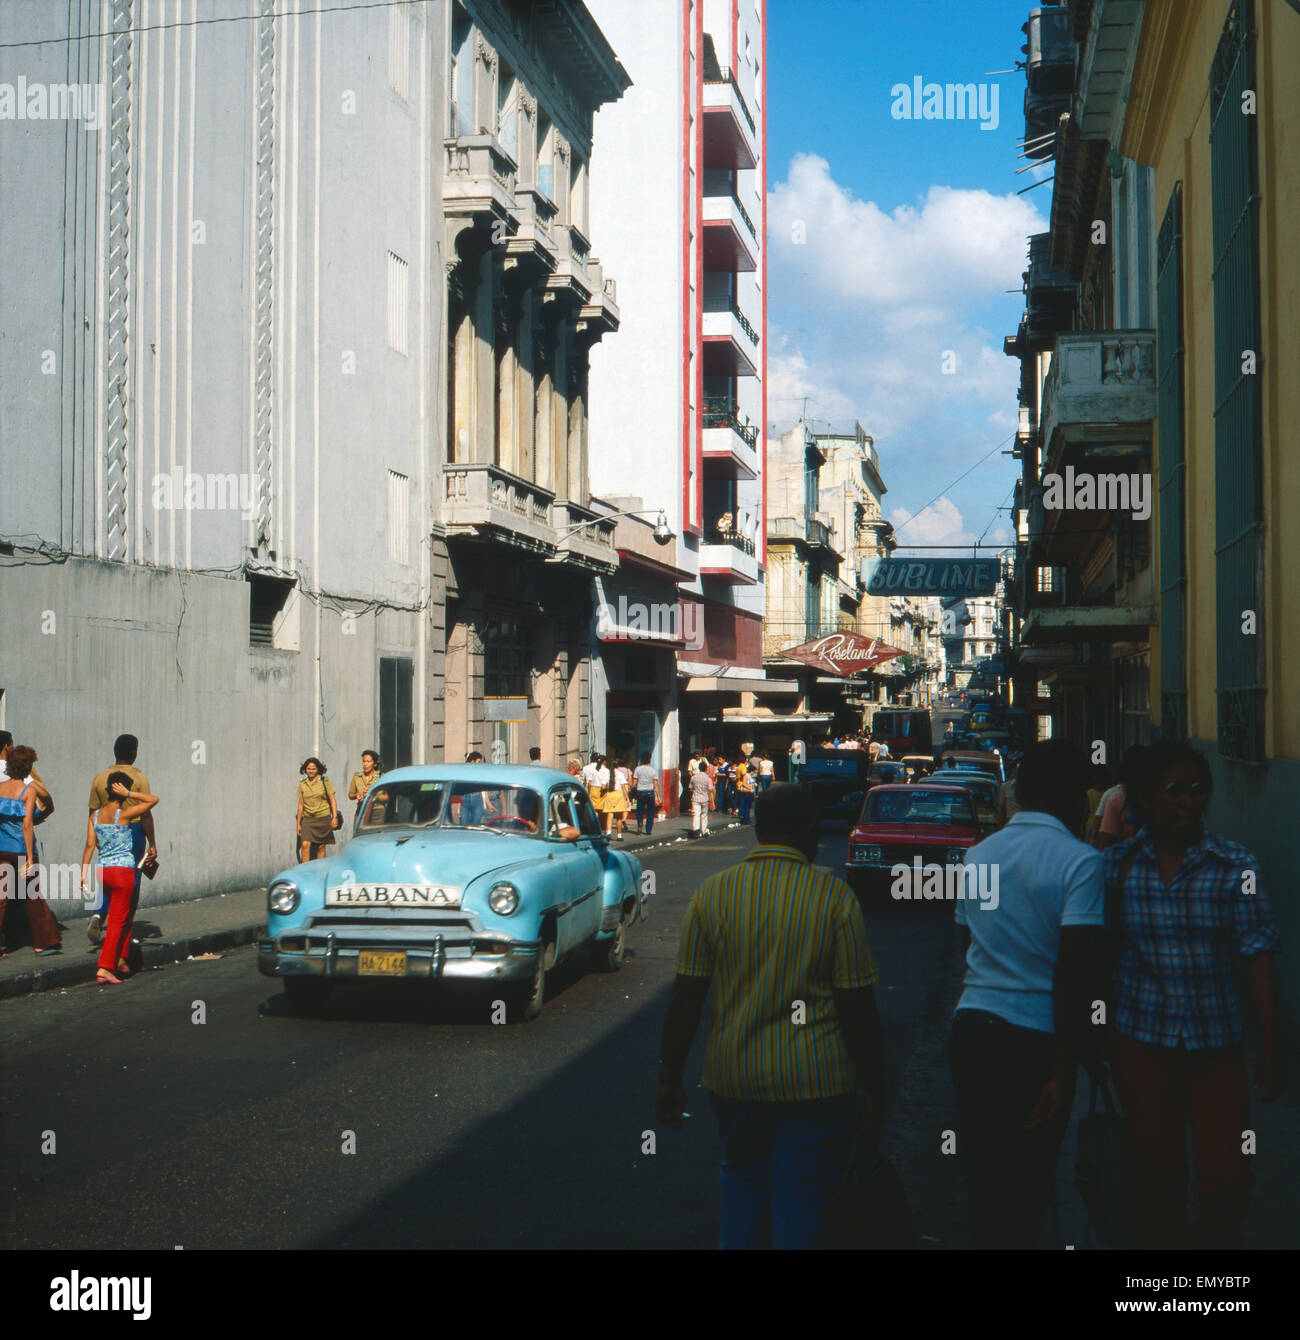 Eine Reise nach Havanna, Kuba, Karibik 1970er Jahre. Un viaggio a L'Avana, Cuba, il Caribe 1970s. Foto Stock